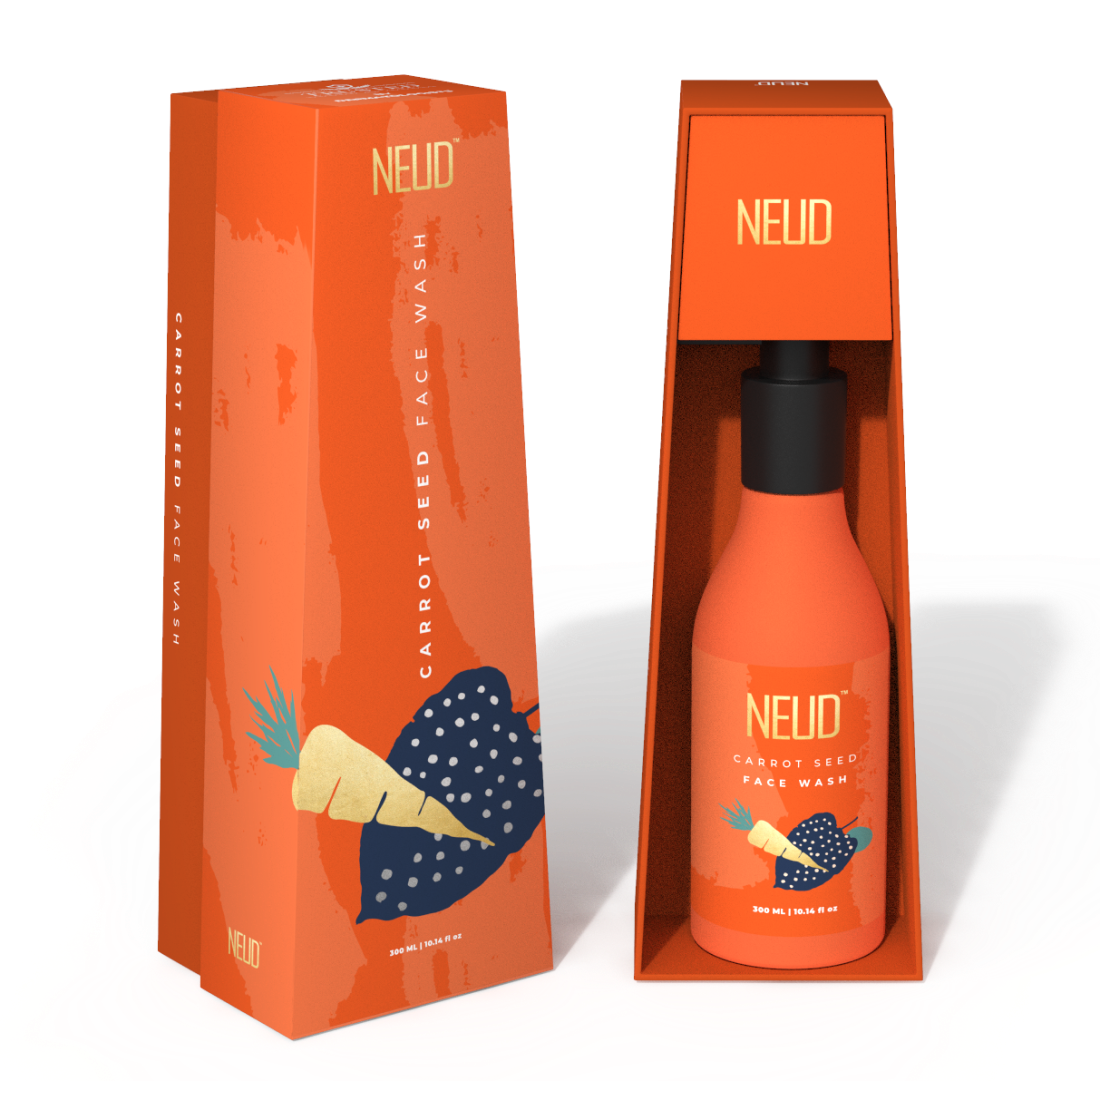 NEUD Carrot Seed Premium Face Wash for Men & Women - Get Free Zipper Pouch